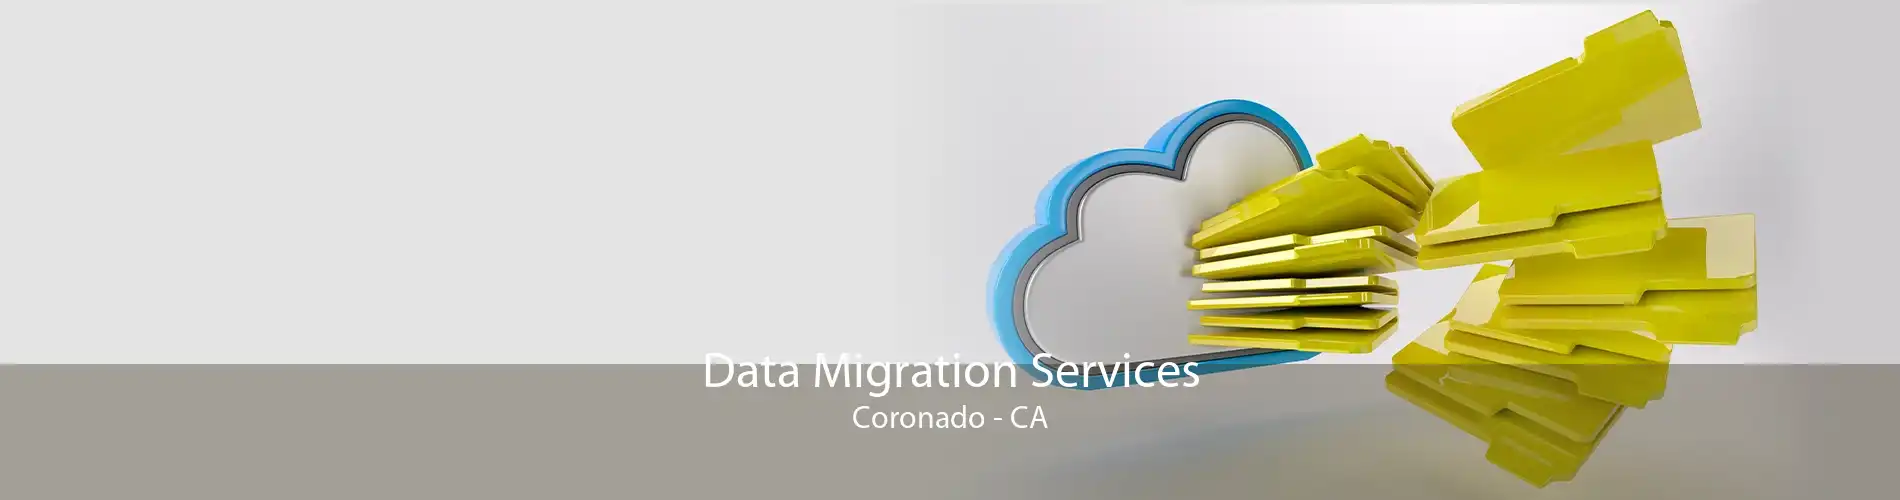 Data Migration Services Coronado - CA